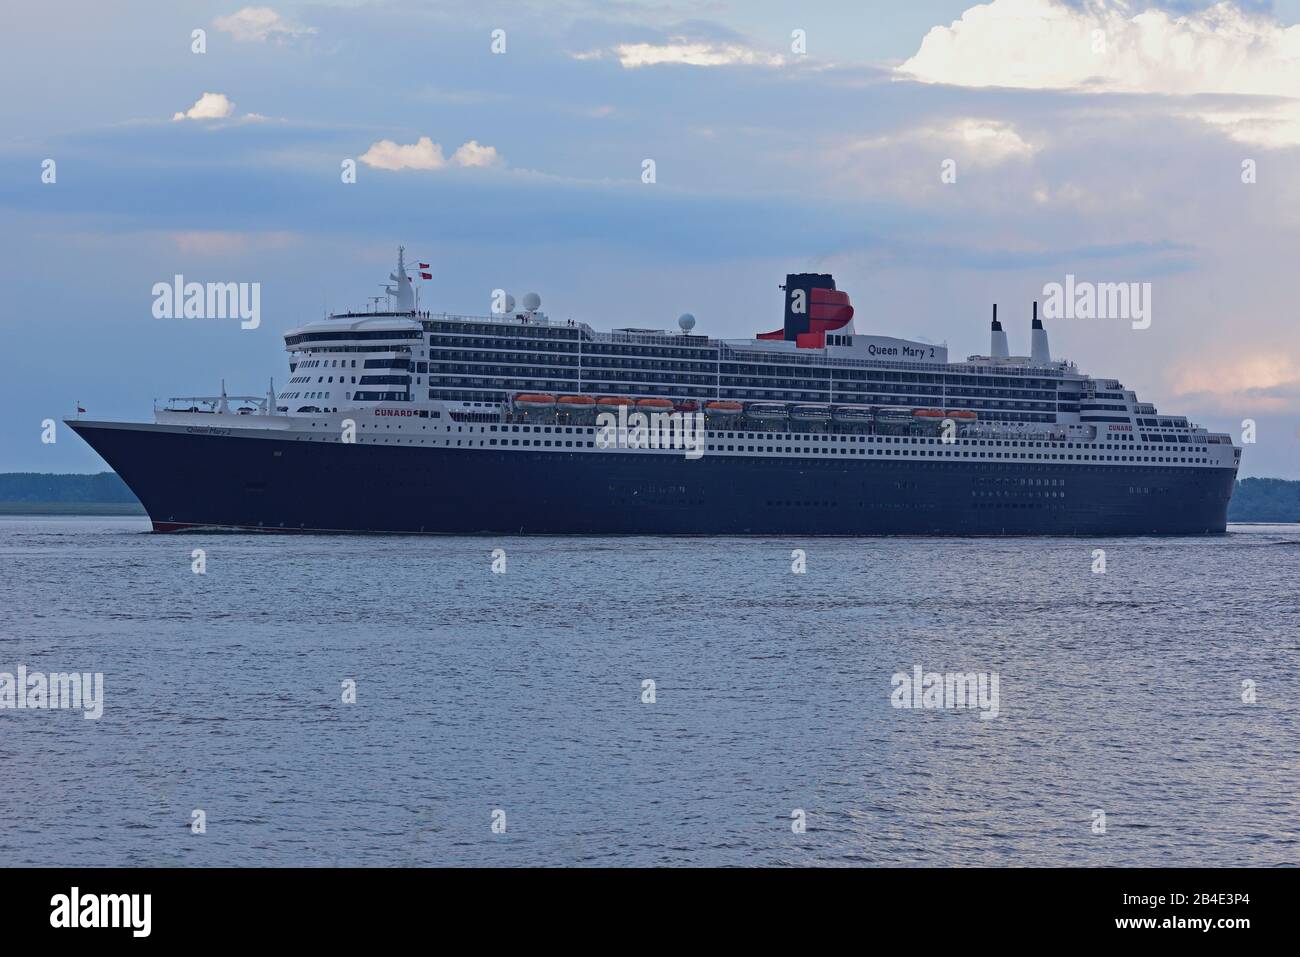 Europa, Germania, Amburgo, Elba, nave passeggeri la regina Maria 2 lascia Amburgo, cielo nuvoloso, umore romantico, luce notturna, Foto Stock